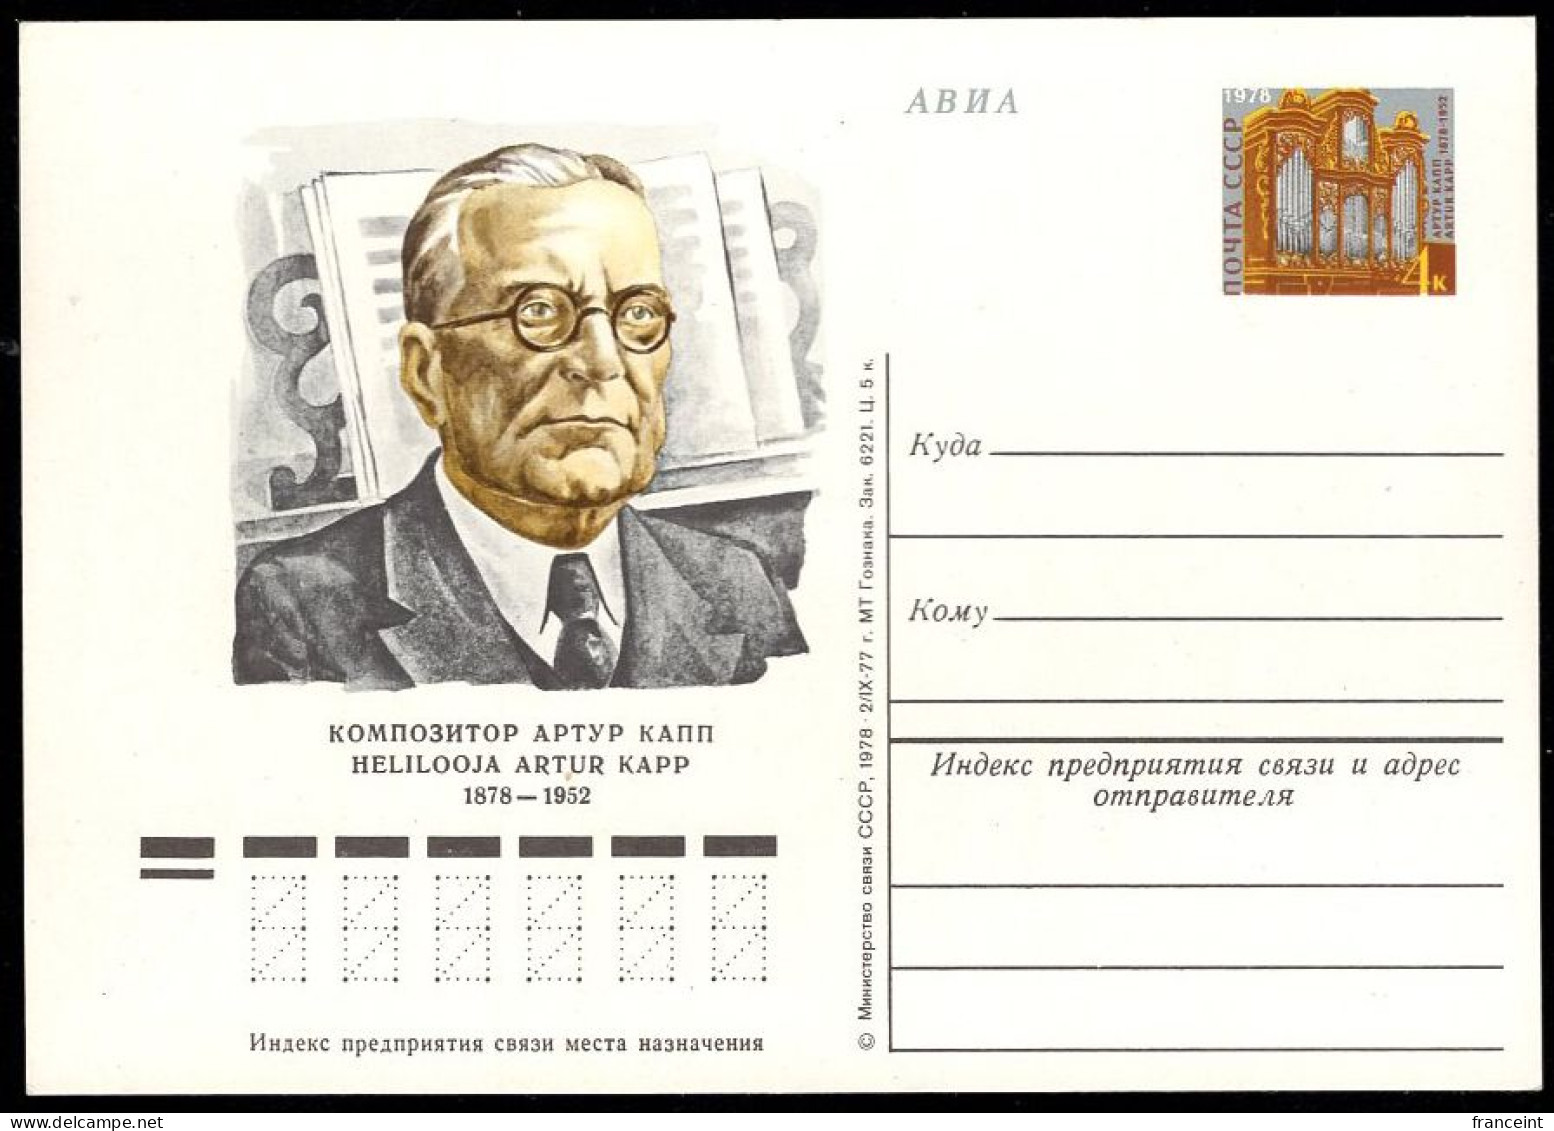 RUSSIA(1978) Artur Kapp. 4 Kop Illustrated Postal Card. Estonian Composer. - 1970-79